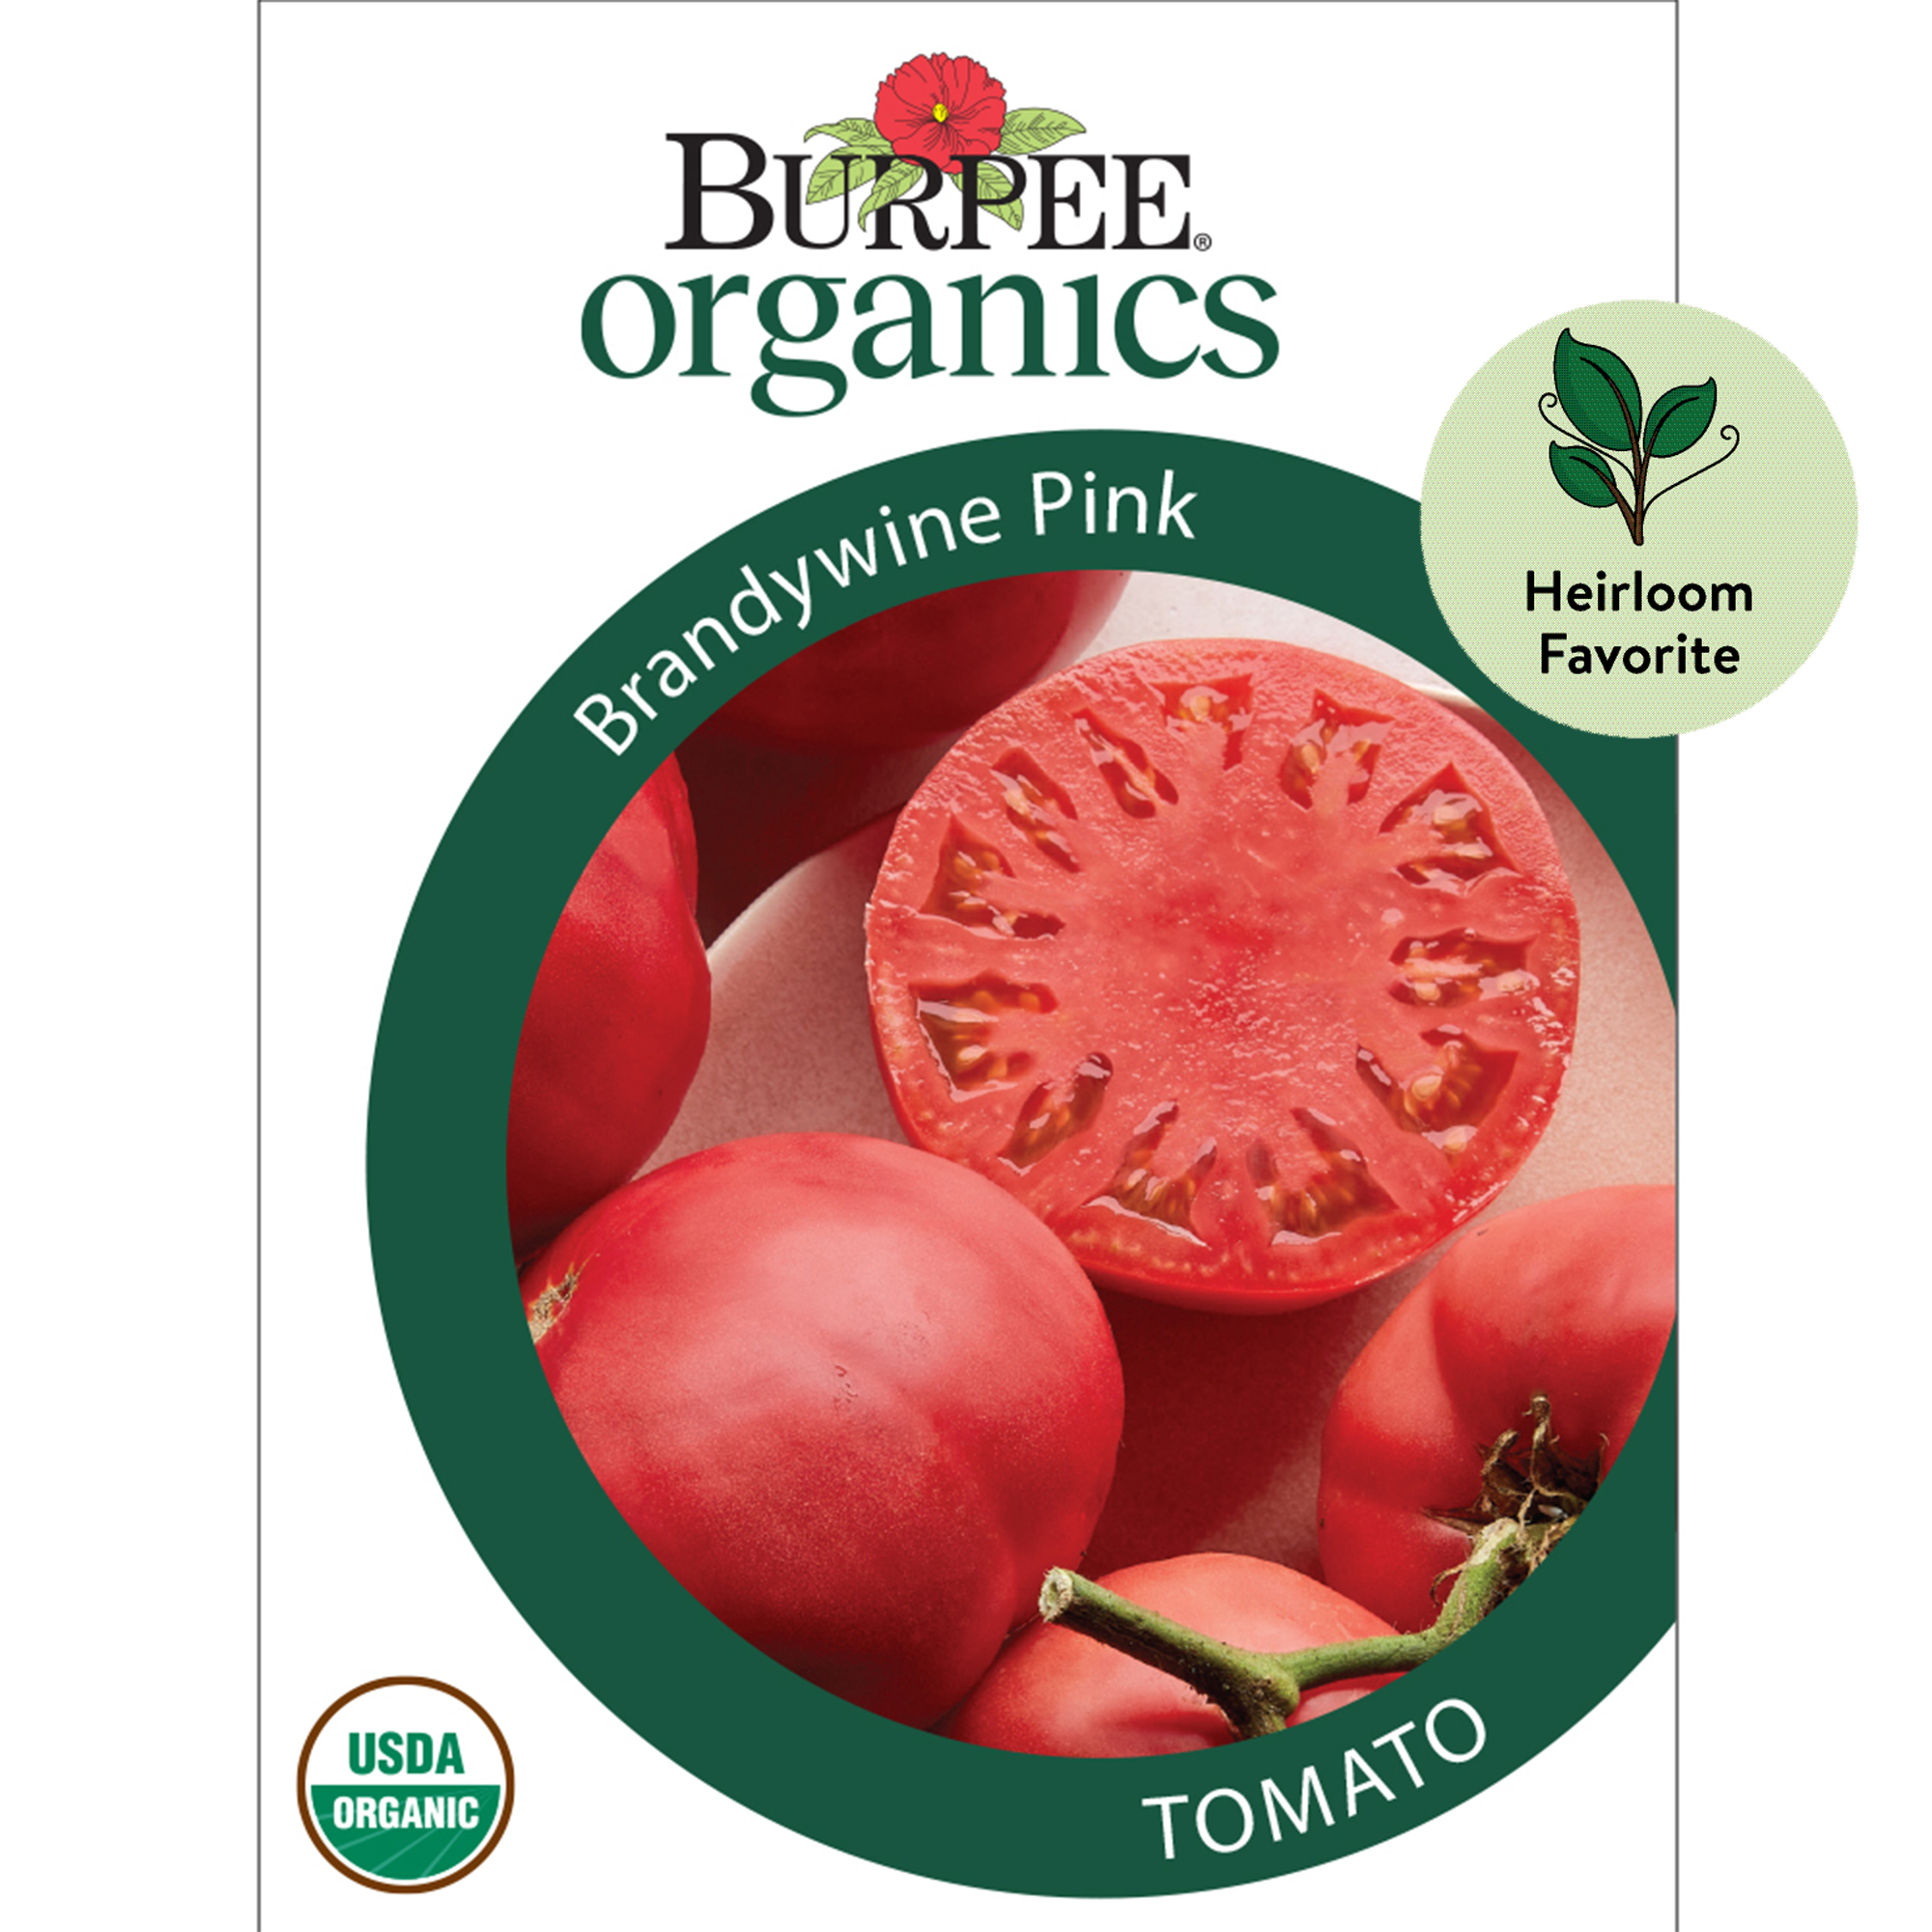 Burpee Organic Brandywine Pink Tomato Vegetable Seed 1 Pack